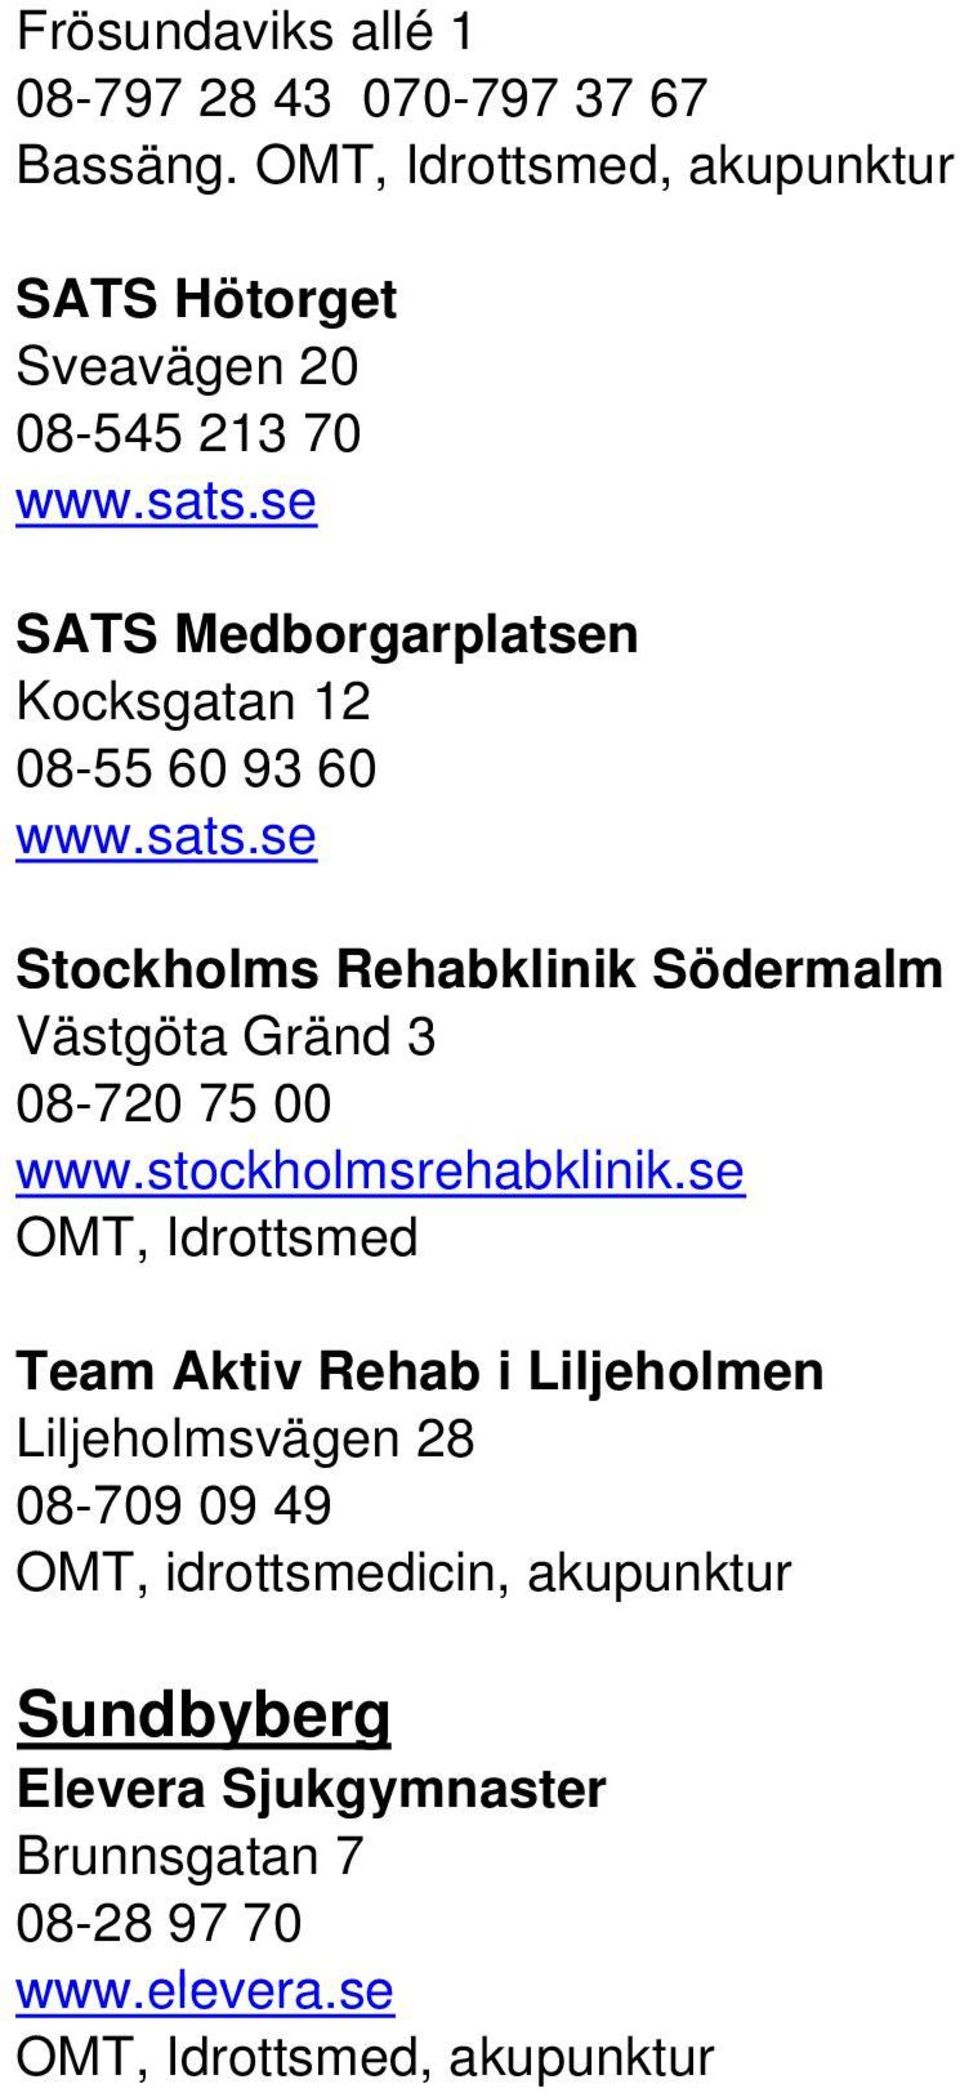 60 Stockholms Rehabklinik Södermalm Västgöta Gränd 3 08-720 75 00 www.stockholmsrehabklinik.